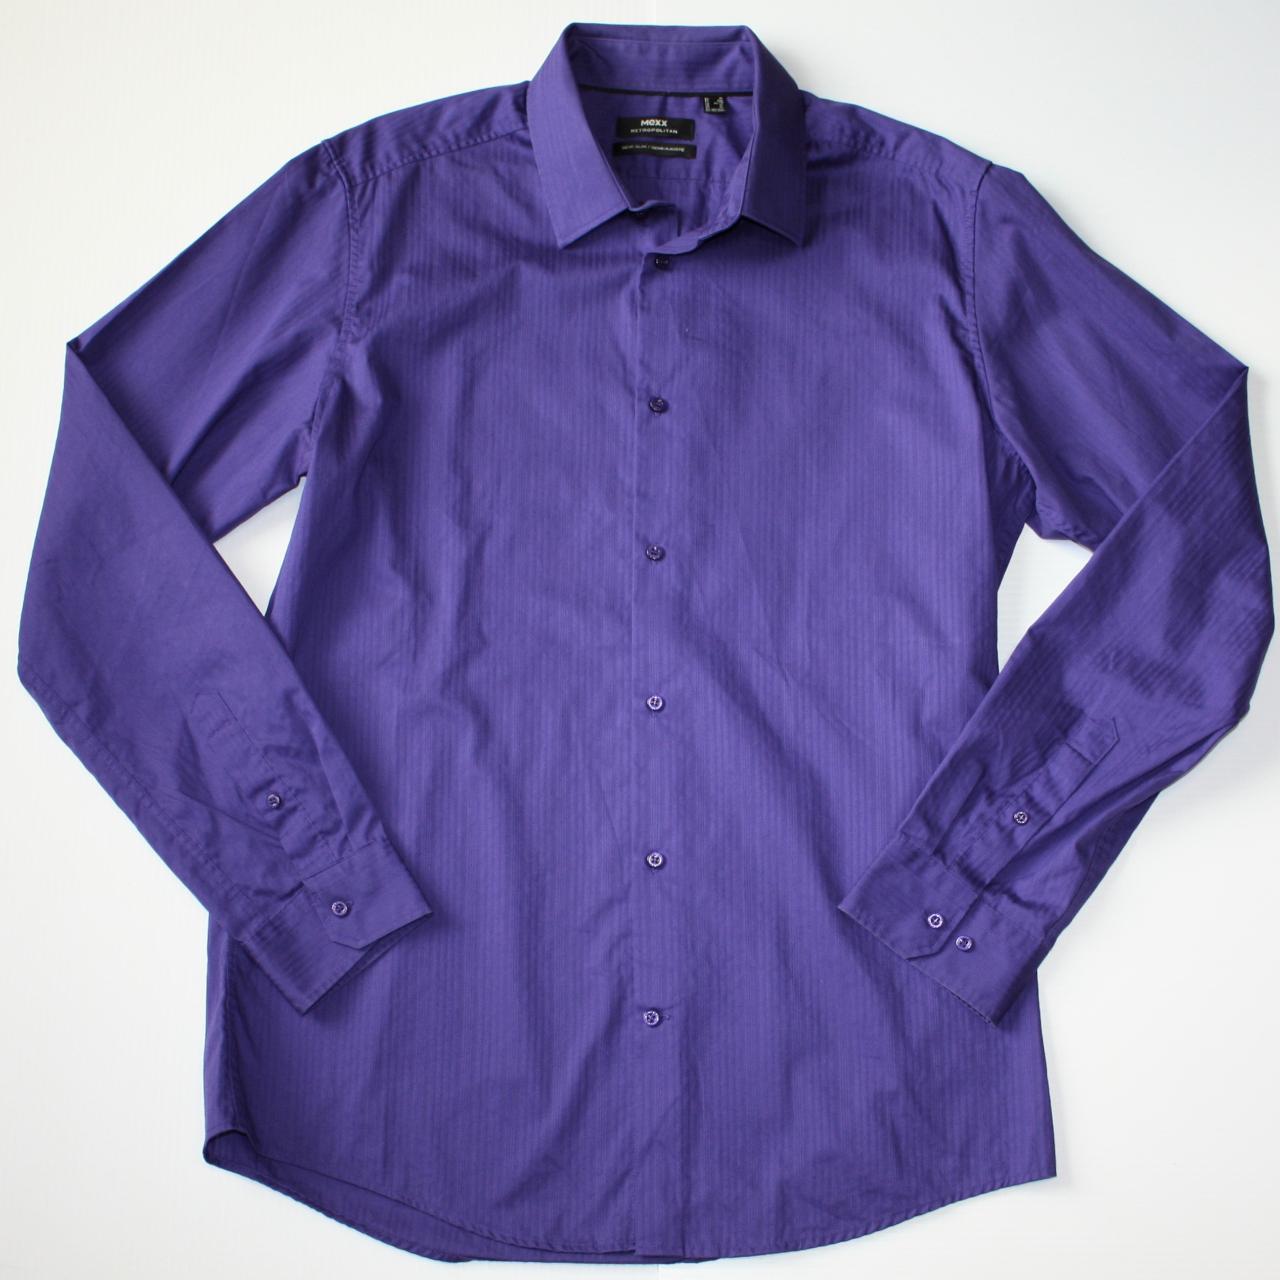 Mexx Metropolitan Slim Fit Men's Purple Dress Shirt... - Depop